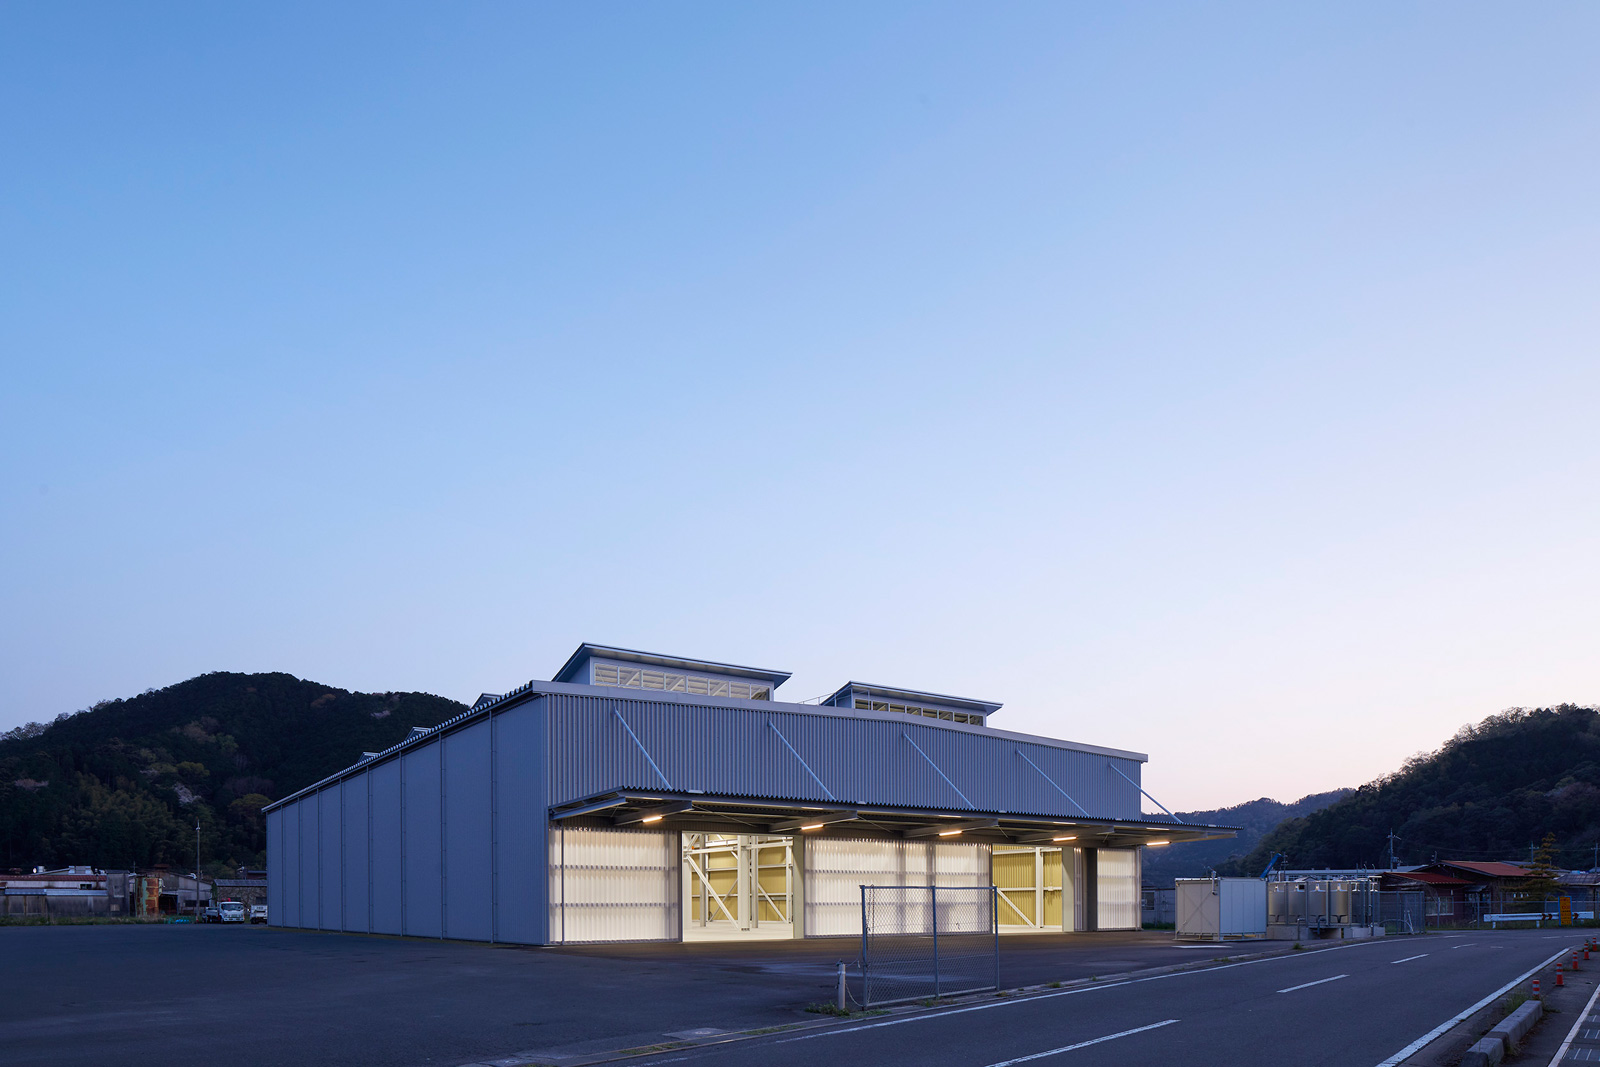 
Completion Year:2020
Gross Built Area: 2,360.56㎡
Project location: Maizuru, Kyoto

Lead Architects: Kenzo Makino & Associates
Structural Design: Jun Yanagimuro Structural Design
HVAC: SOKENSYA CO.LTD
Construction: YOSHIZUMI CO., LTD
Photo credits:  Toshiyuki Yano